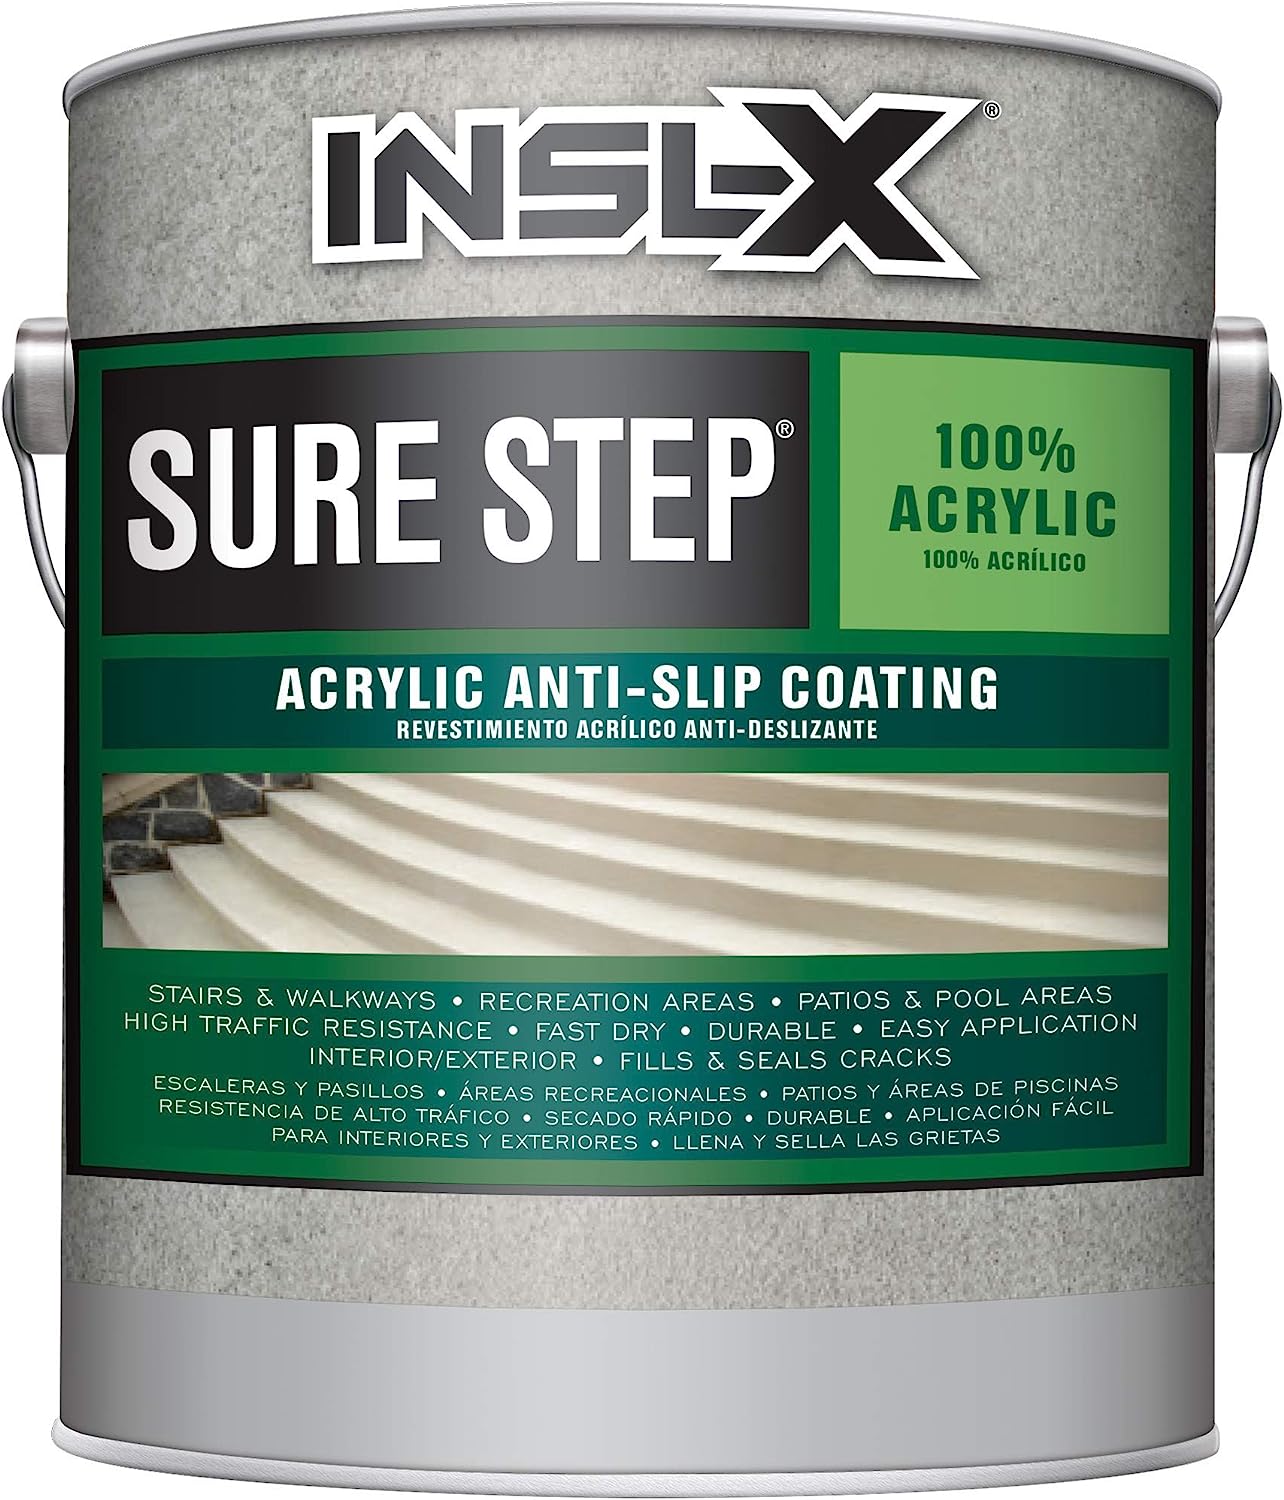 INSL-X SU078909A-01 Sure Step Acrylic Anti-Slip [...]